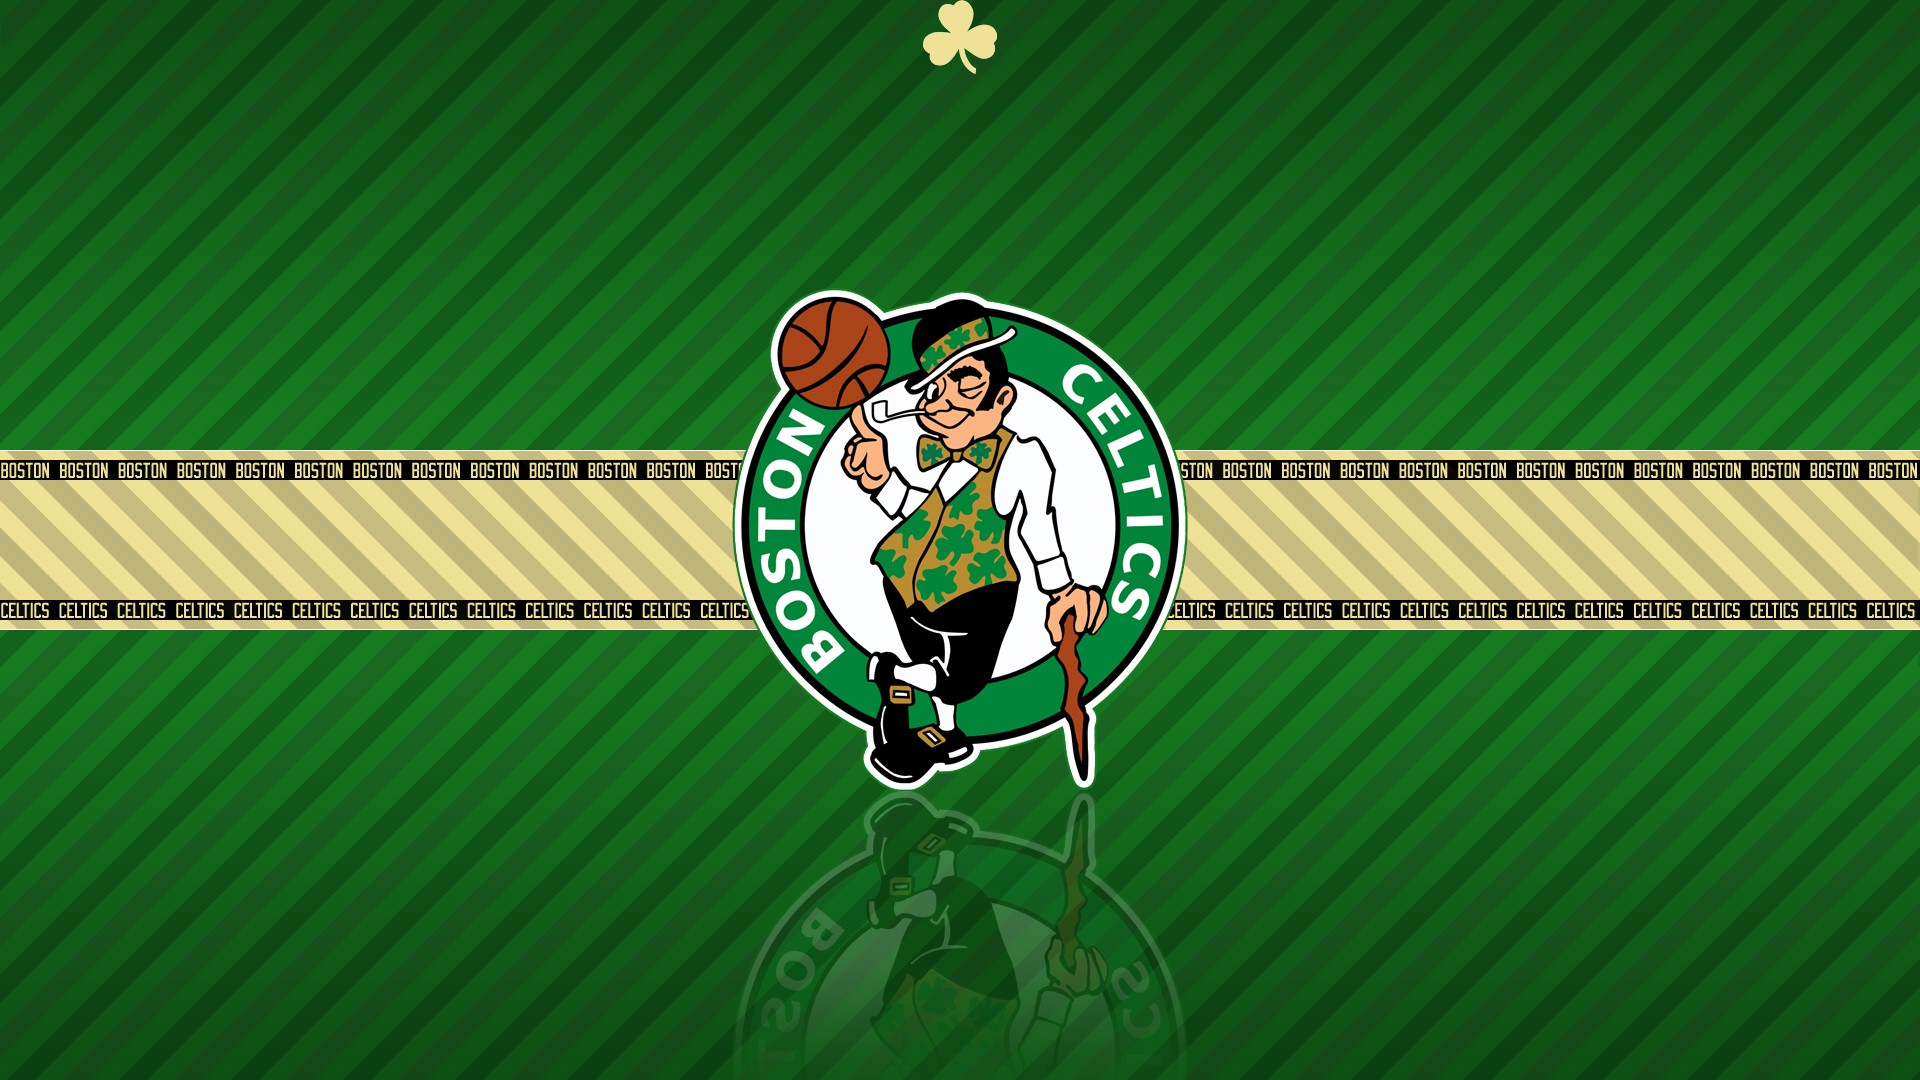 Boston Celtics Full HD Wallpaper And Background